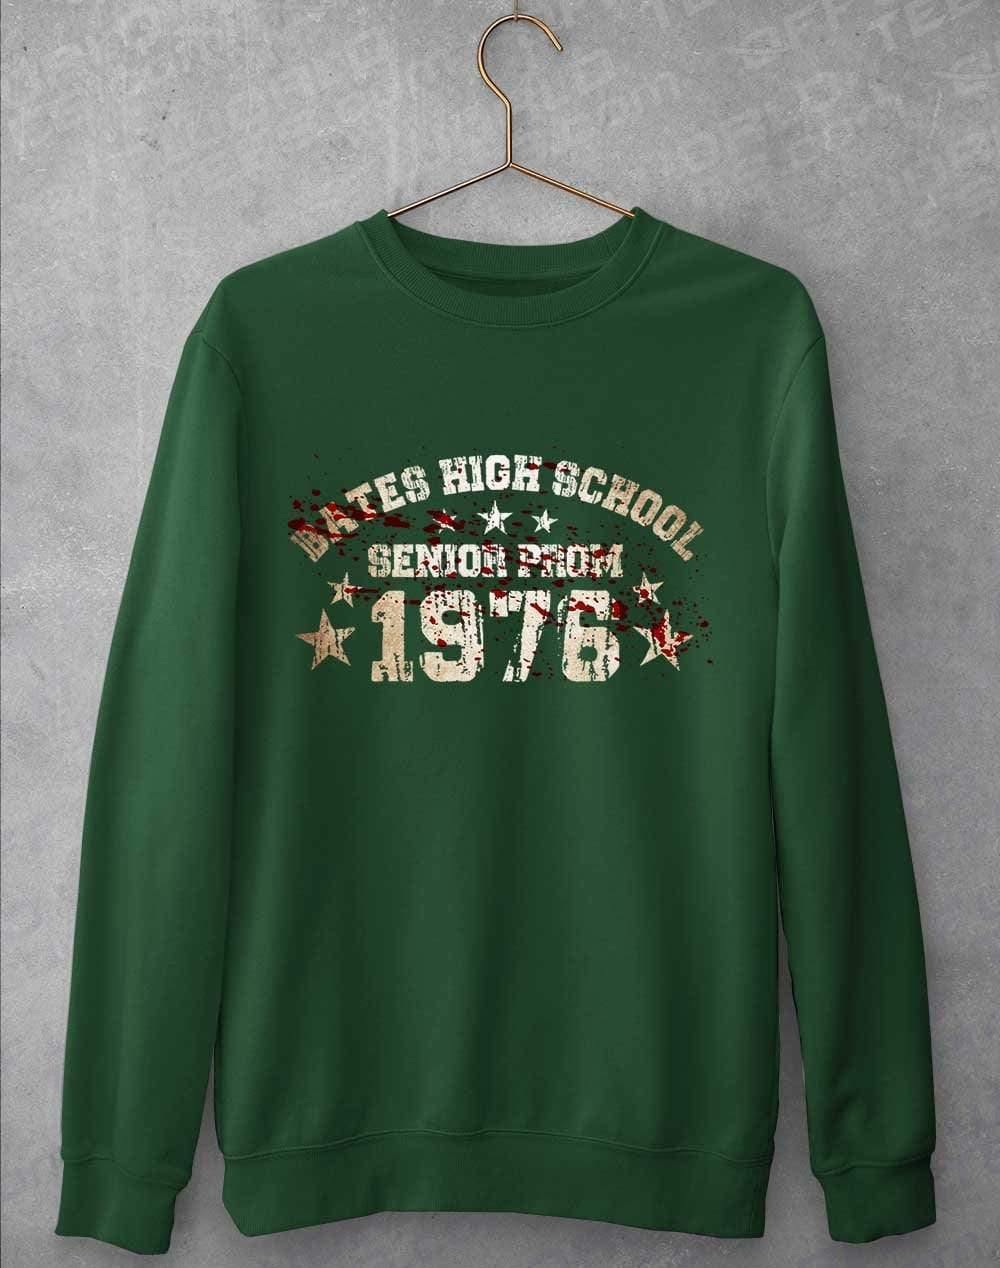 Bates High School Prom 1976 Sweatshirt S / Bottle Green  - Off World Tees